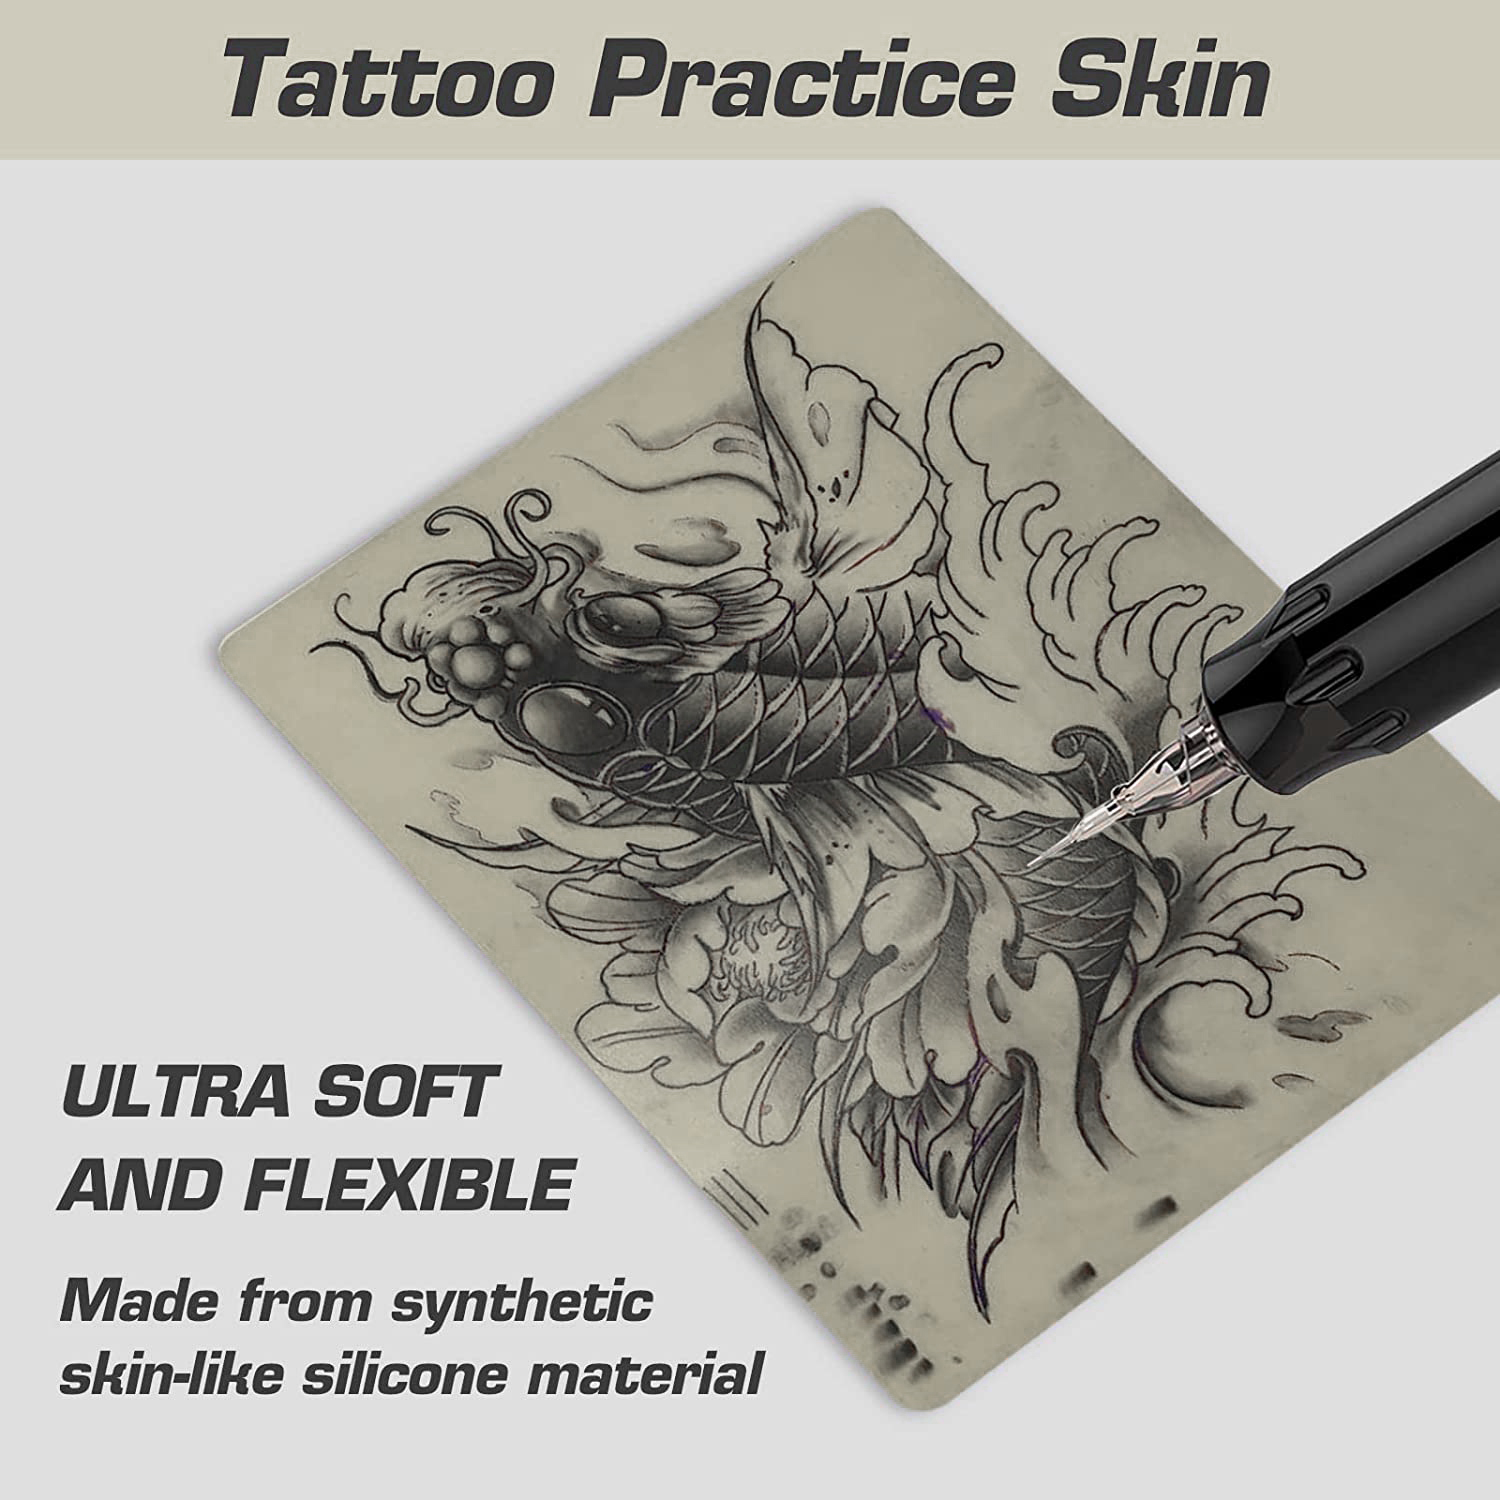 3mm Tattoo Skin Practice - Yangna Tattoo Skins Fake 5pcs 12x8 3mm thcik  Tattoo Skin Practice Tattoo Fake Skin Soft Silicone Fake Skin Tattoo